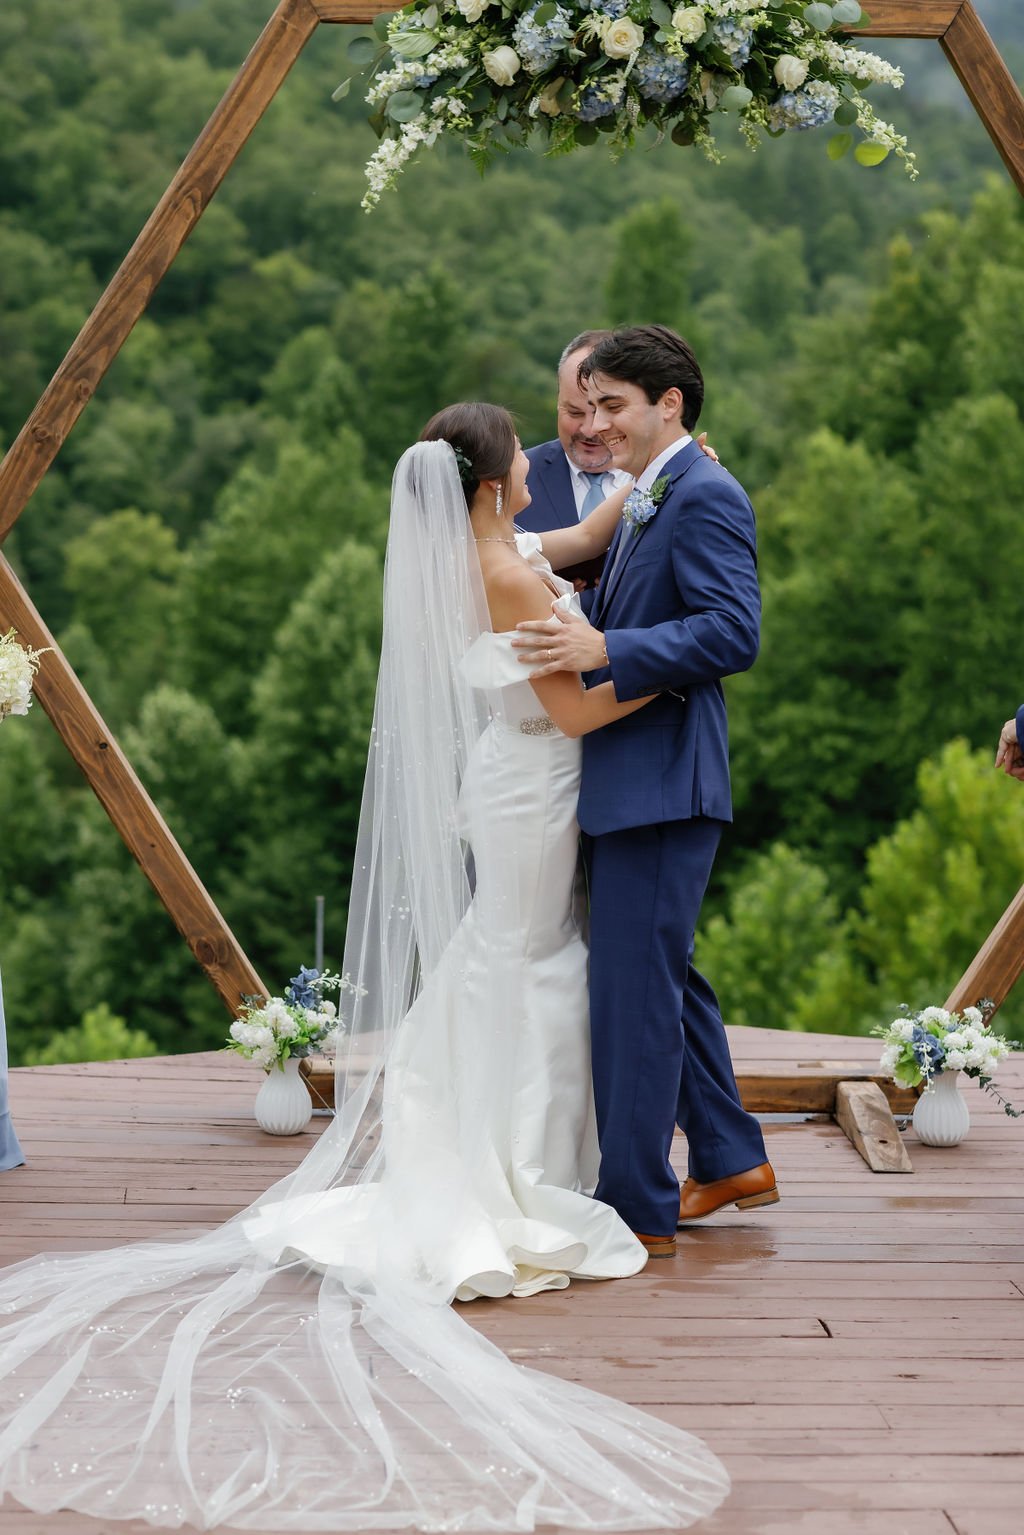 gatlinburg-photographer-mountain-mist-farms-wedding-venue-couple-celebrating-marriage